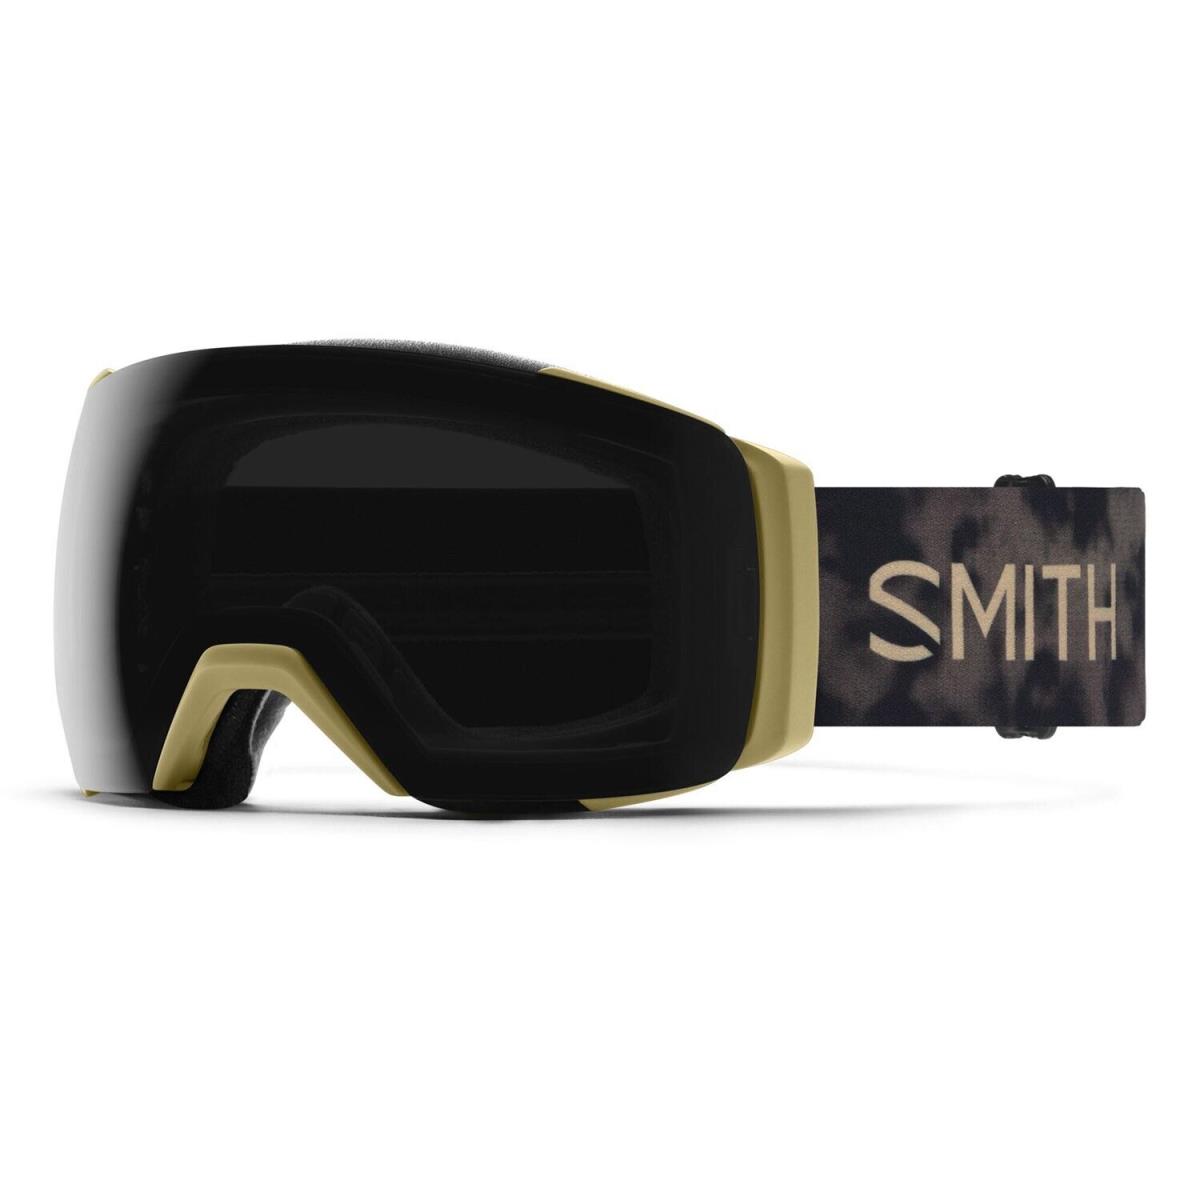 Smith I/o Mag XL Snow Goggles Sandstorm Mind Expanders Sun Black Lens + Bonus